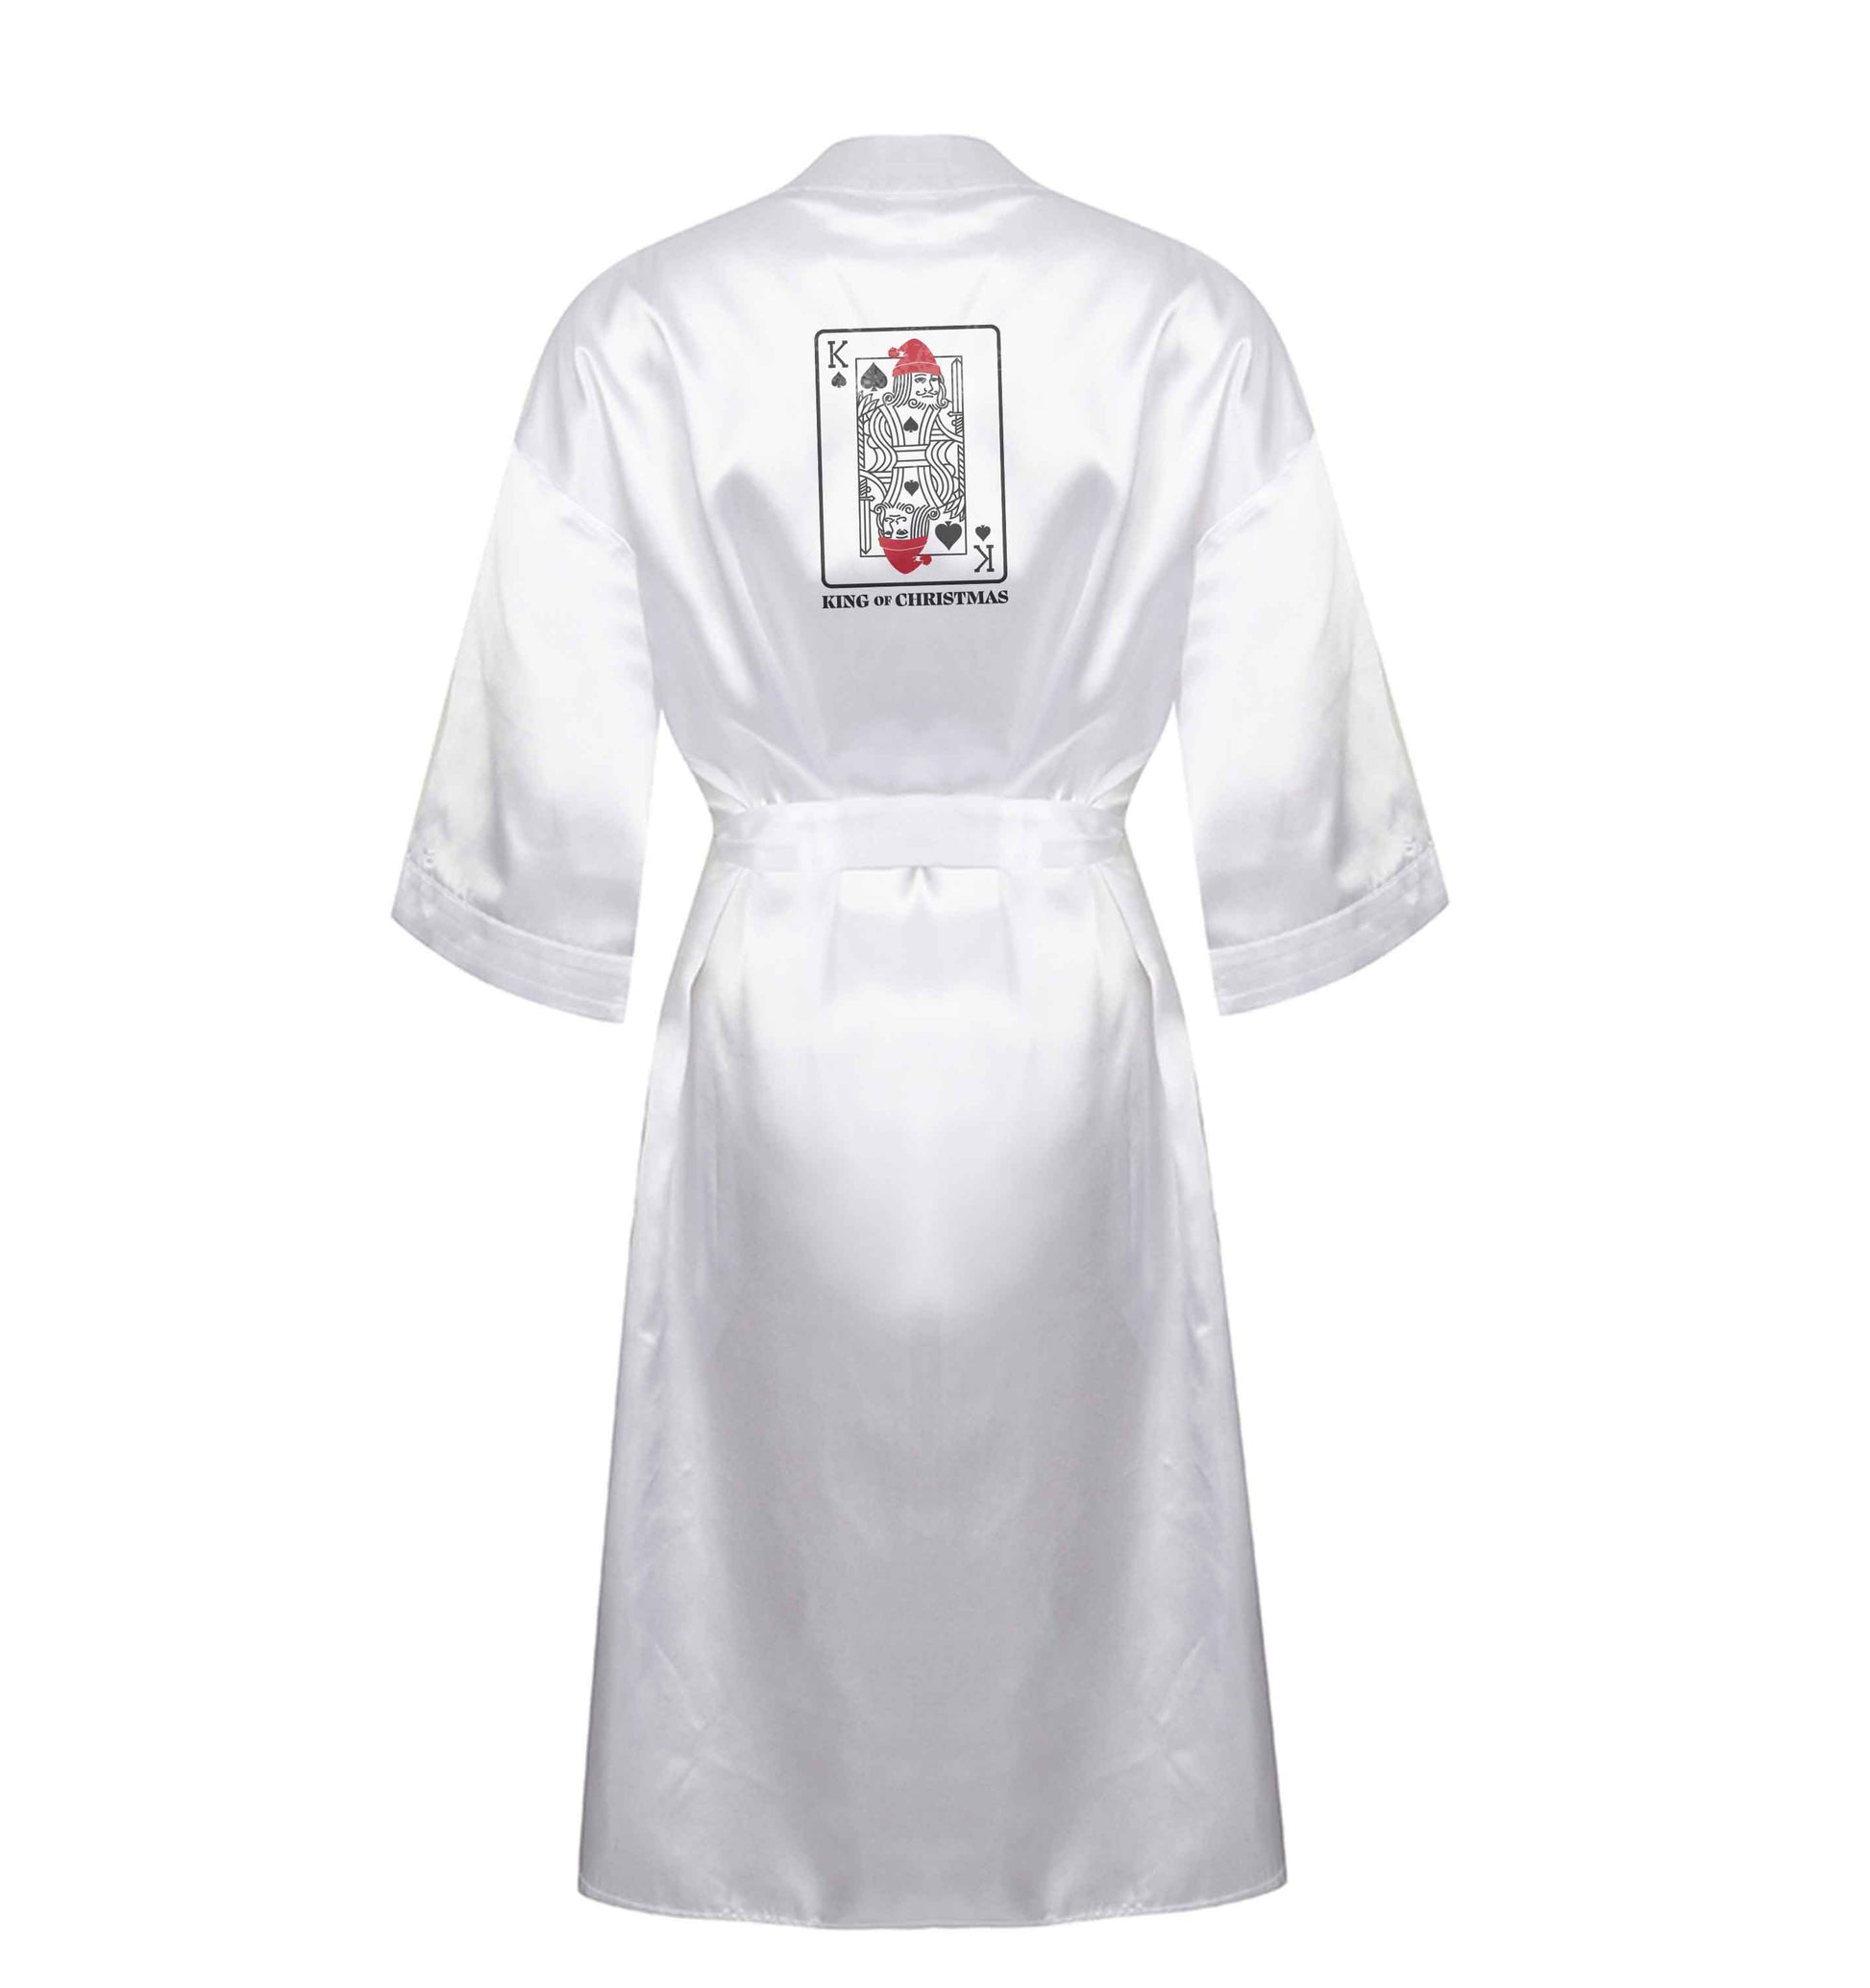 King of christmas XL/XXL white ladies dressing gown size 16/18